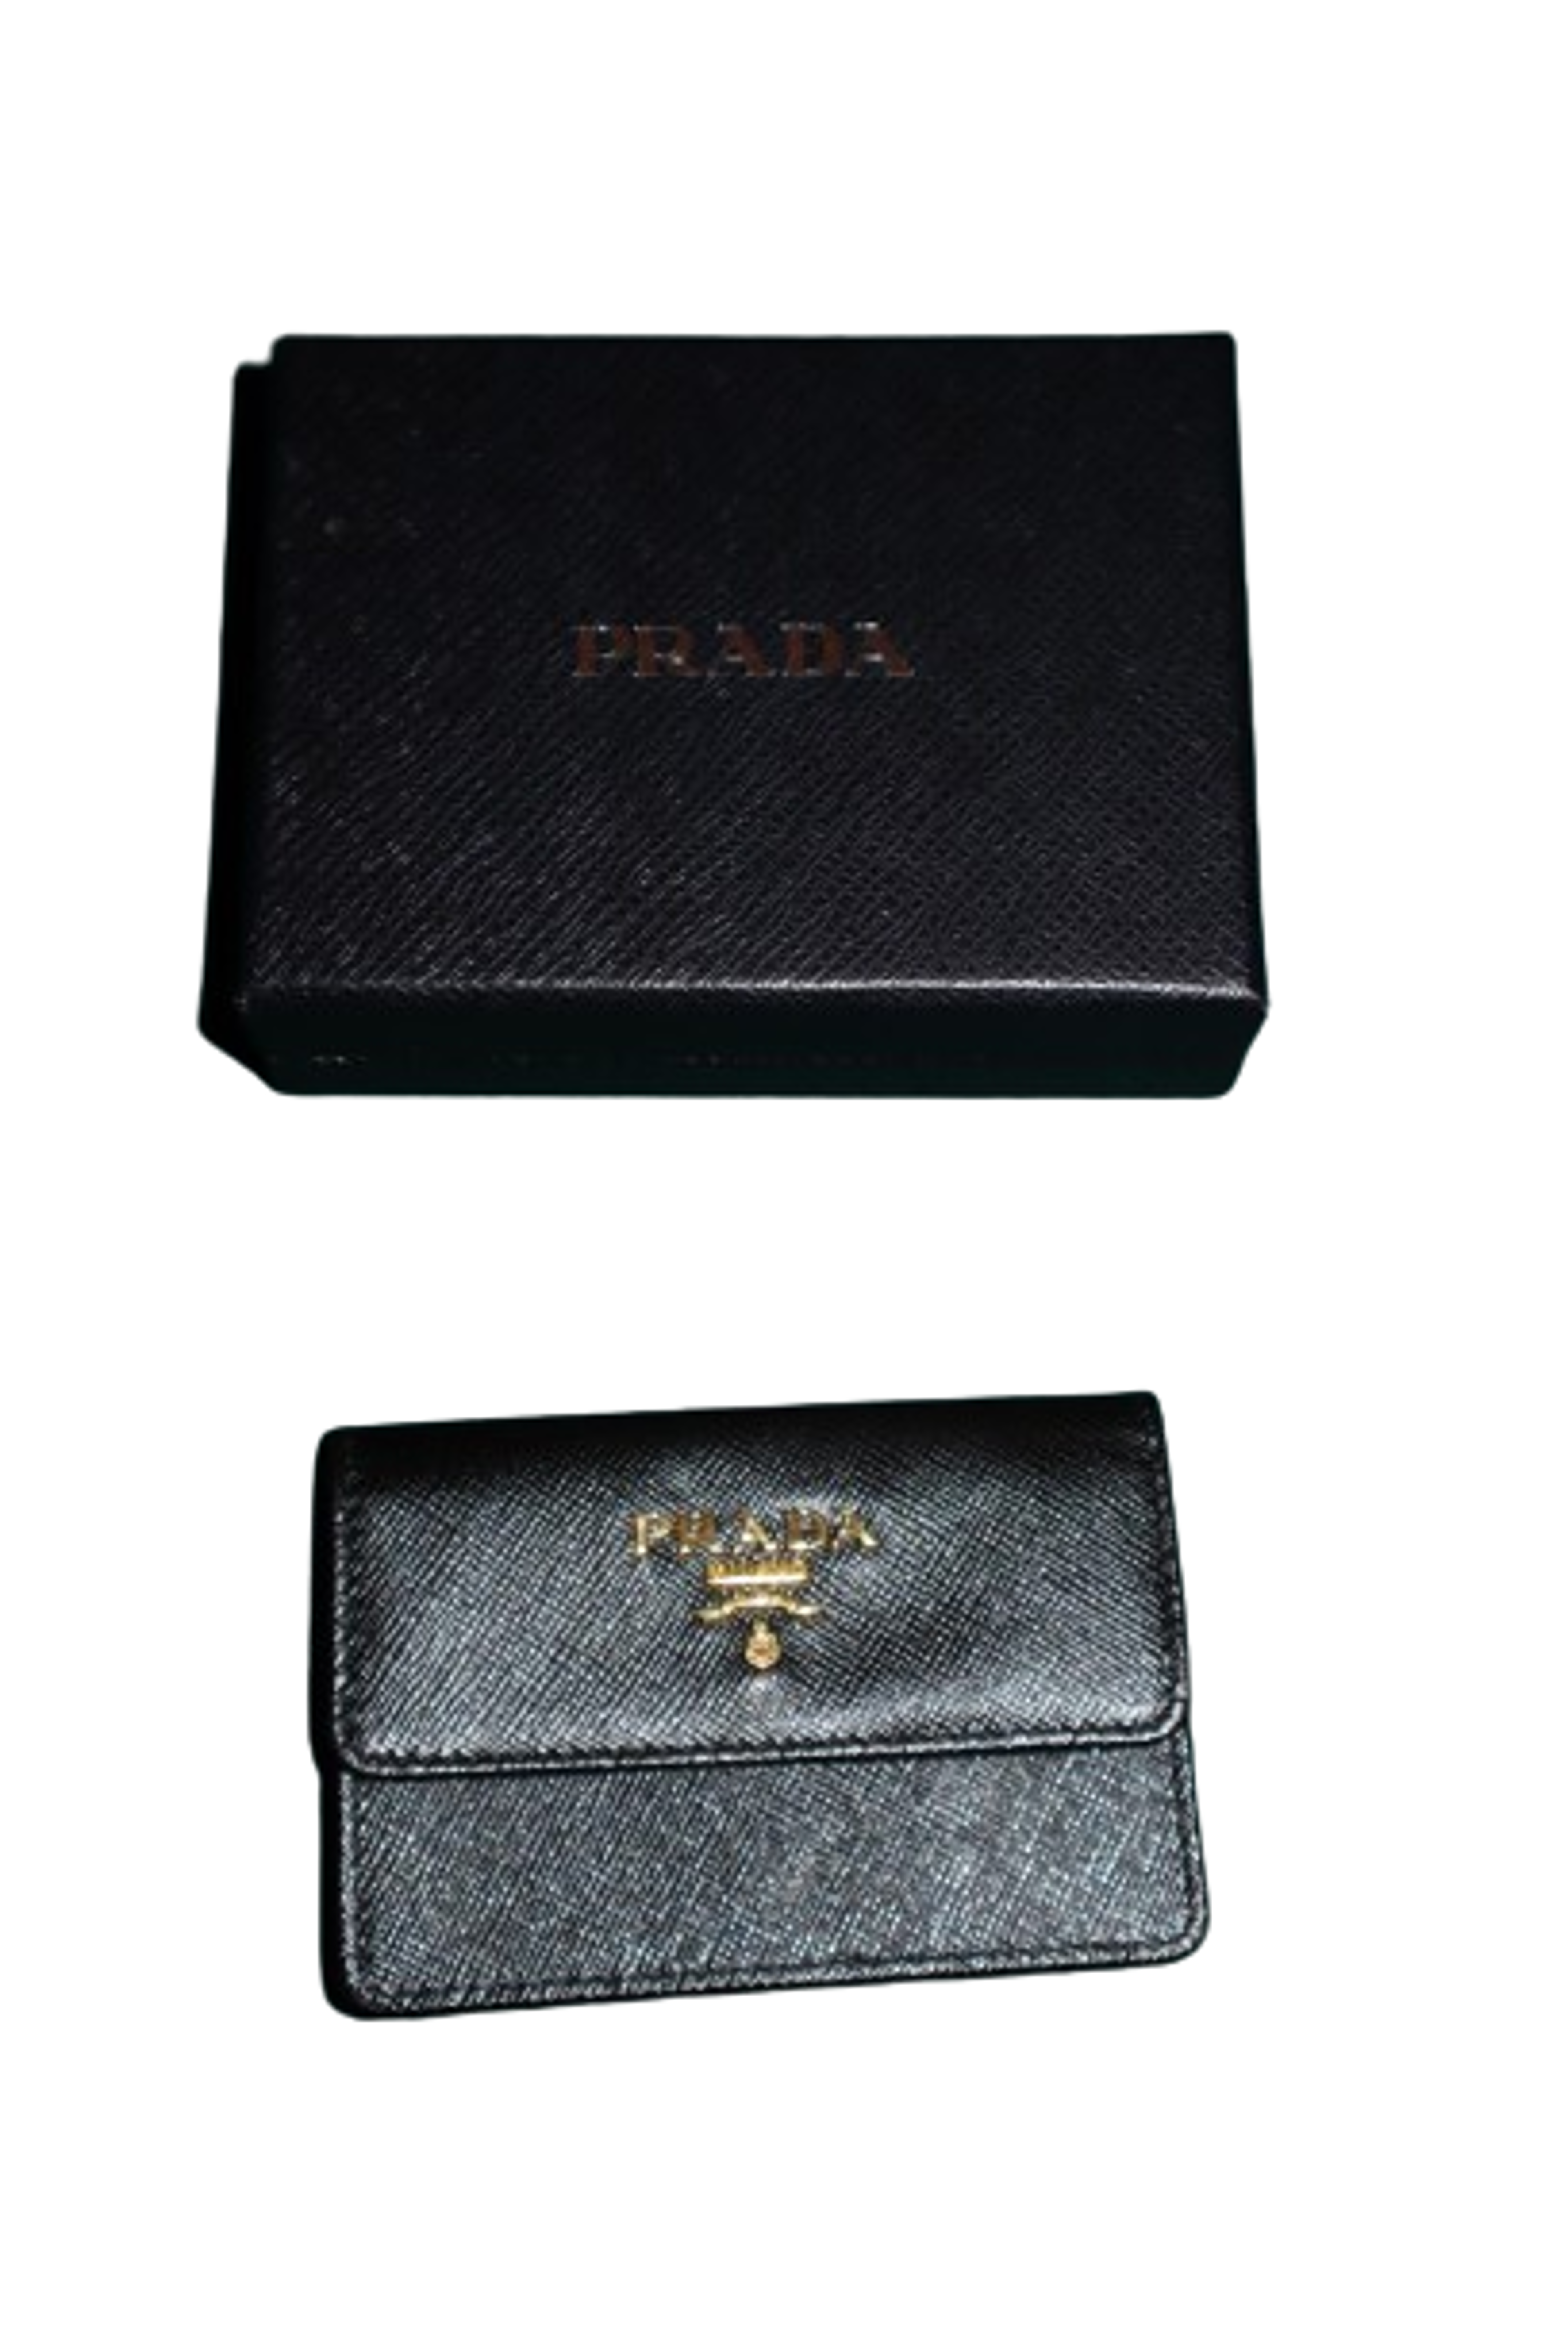 Alternate View 10 of Prada Black Saffiano Leather Flap Card Holder NEW